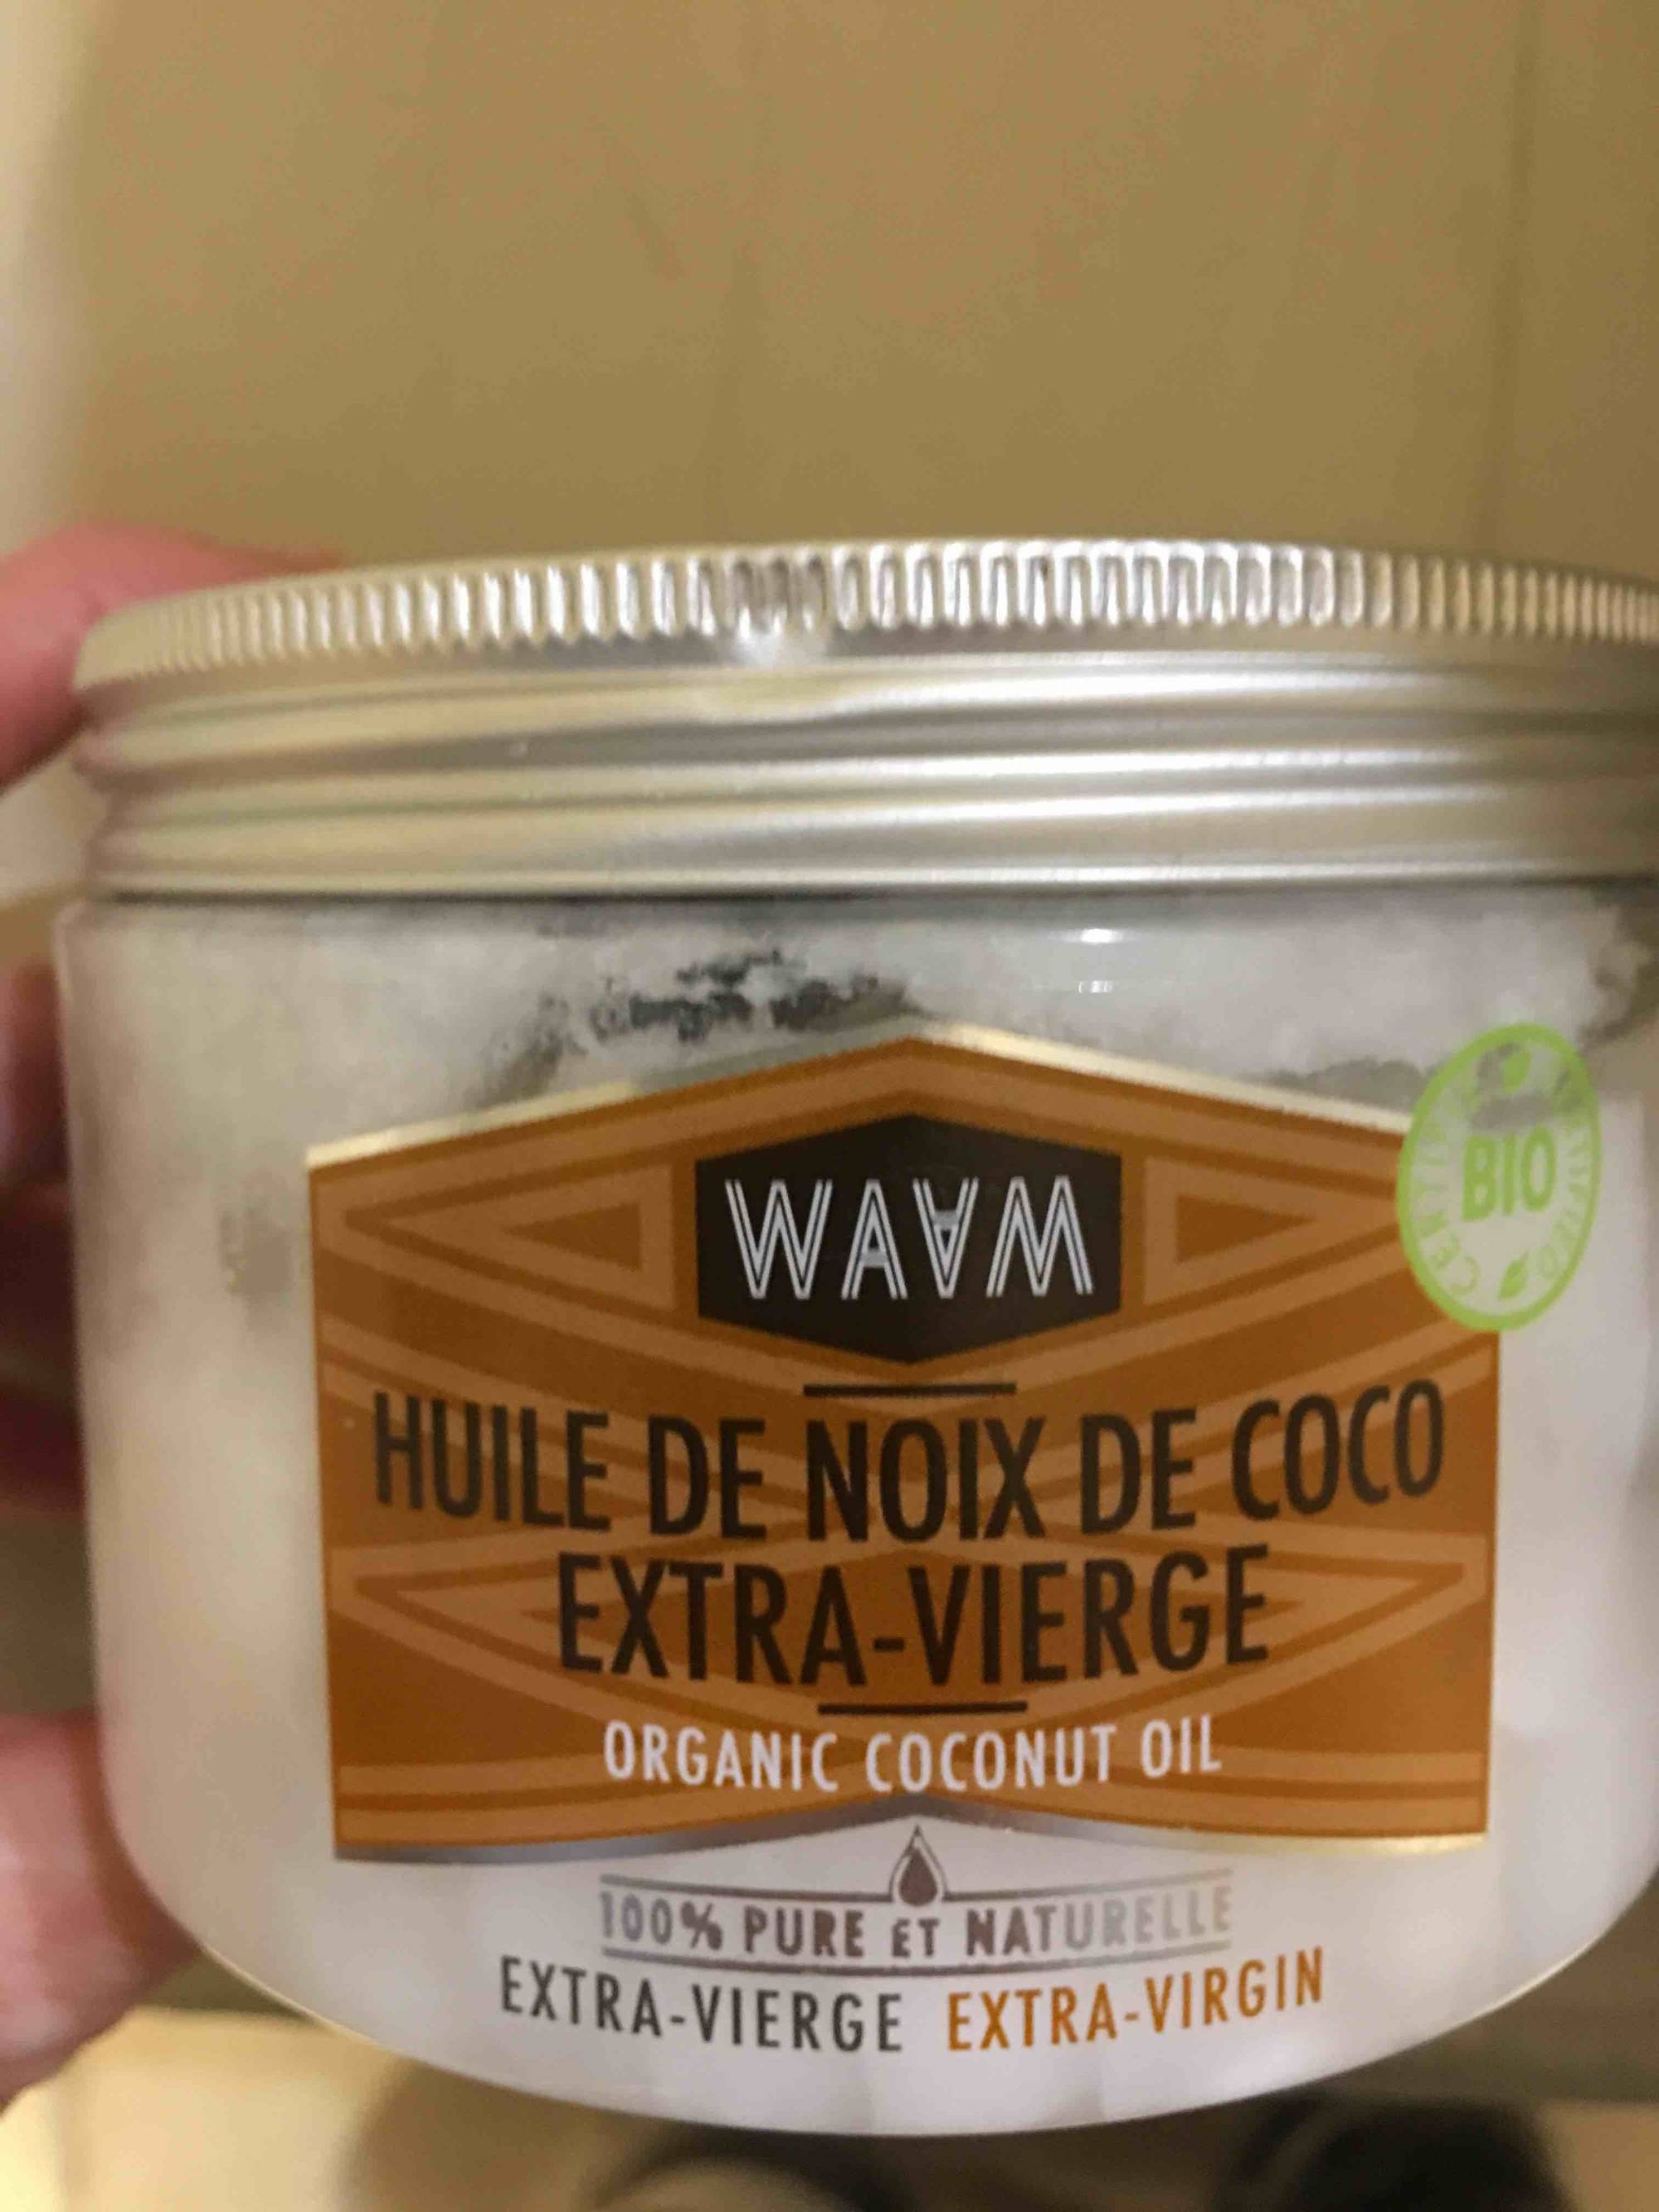 WAAM - Huile de noix de coco extra-vierge